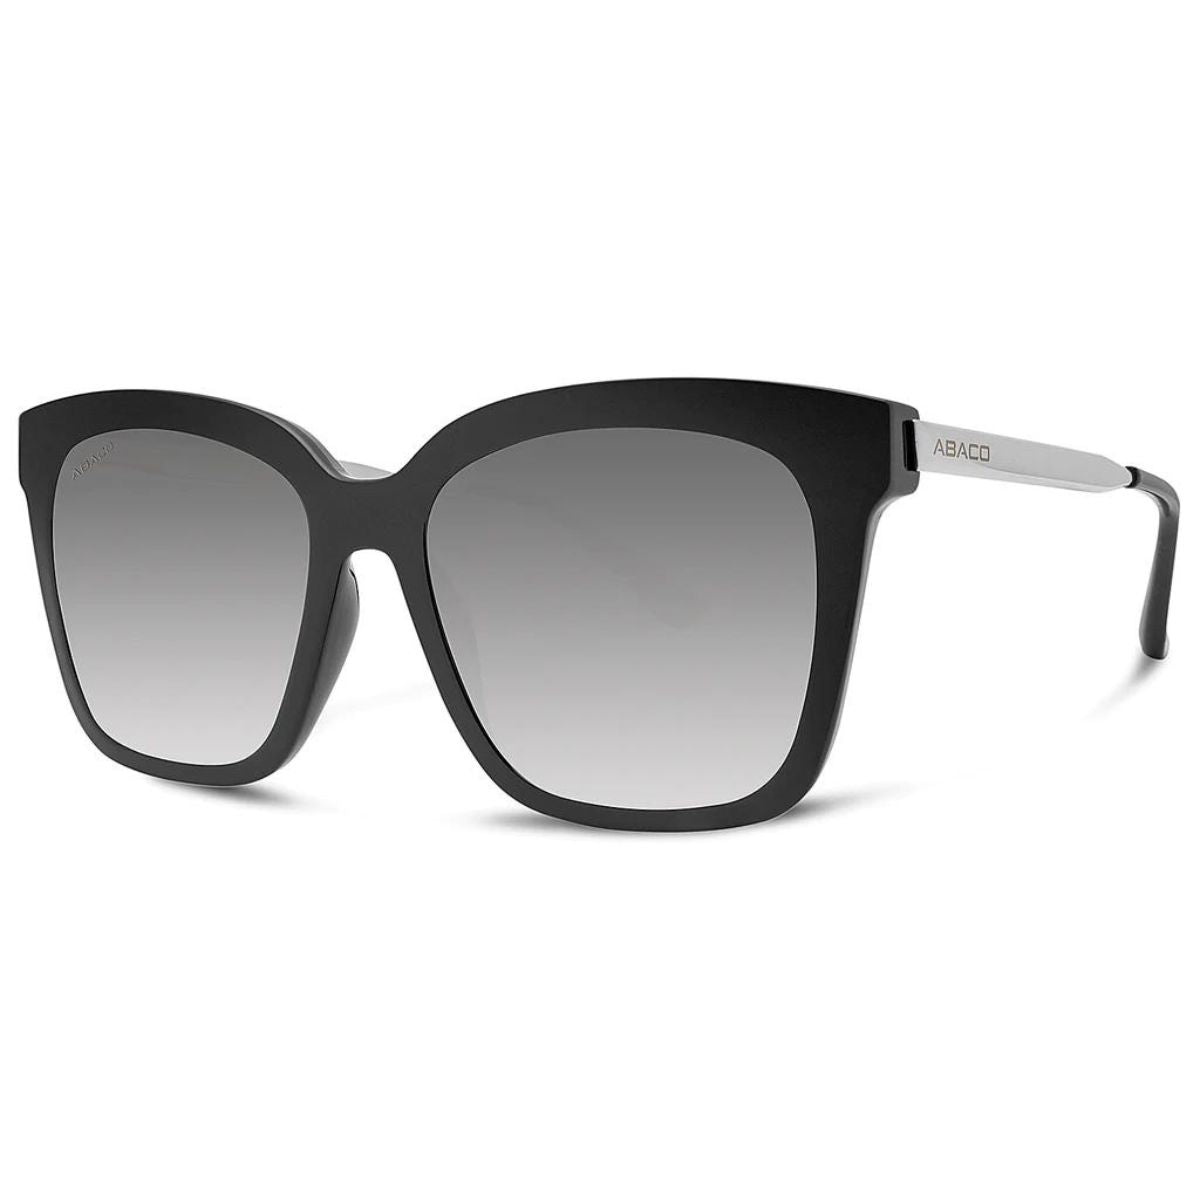 Abaco Zoe Sunglasses in Black/Grey Gradient - BoardCo